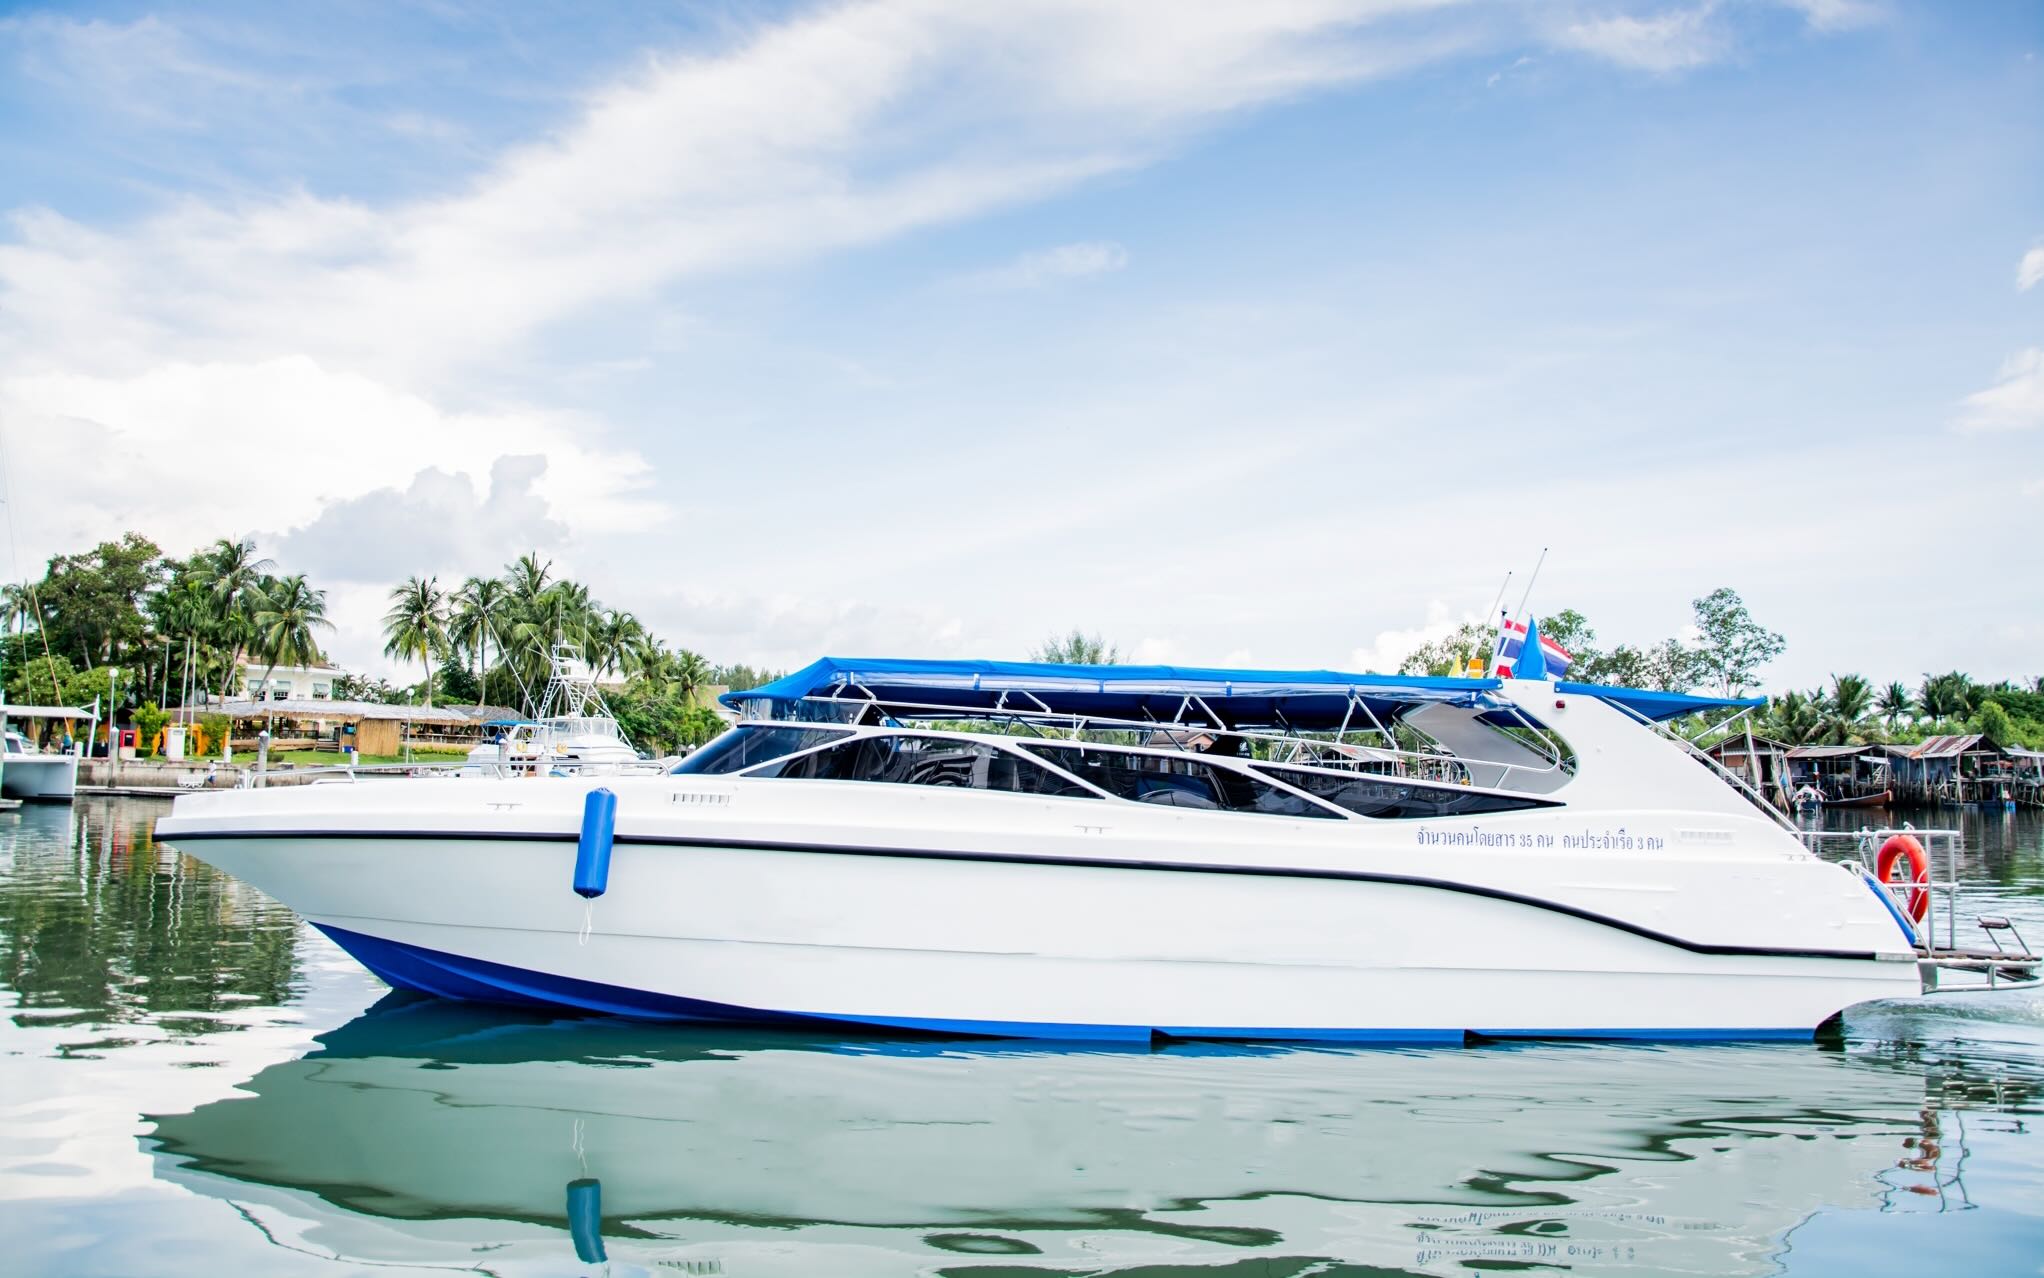 Coral Island – Private Speedboat tour